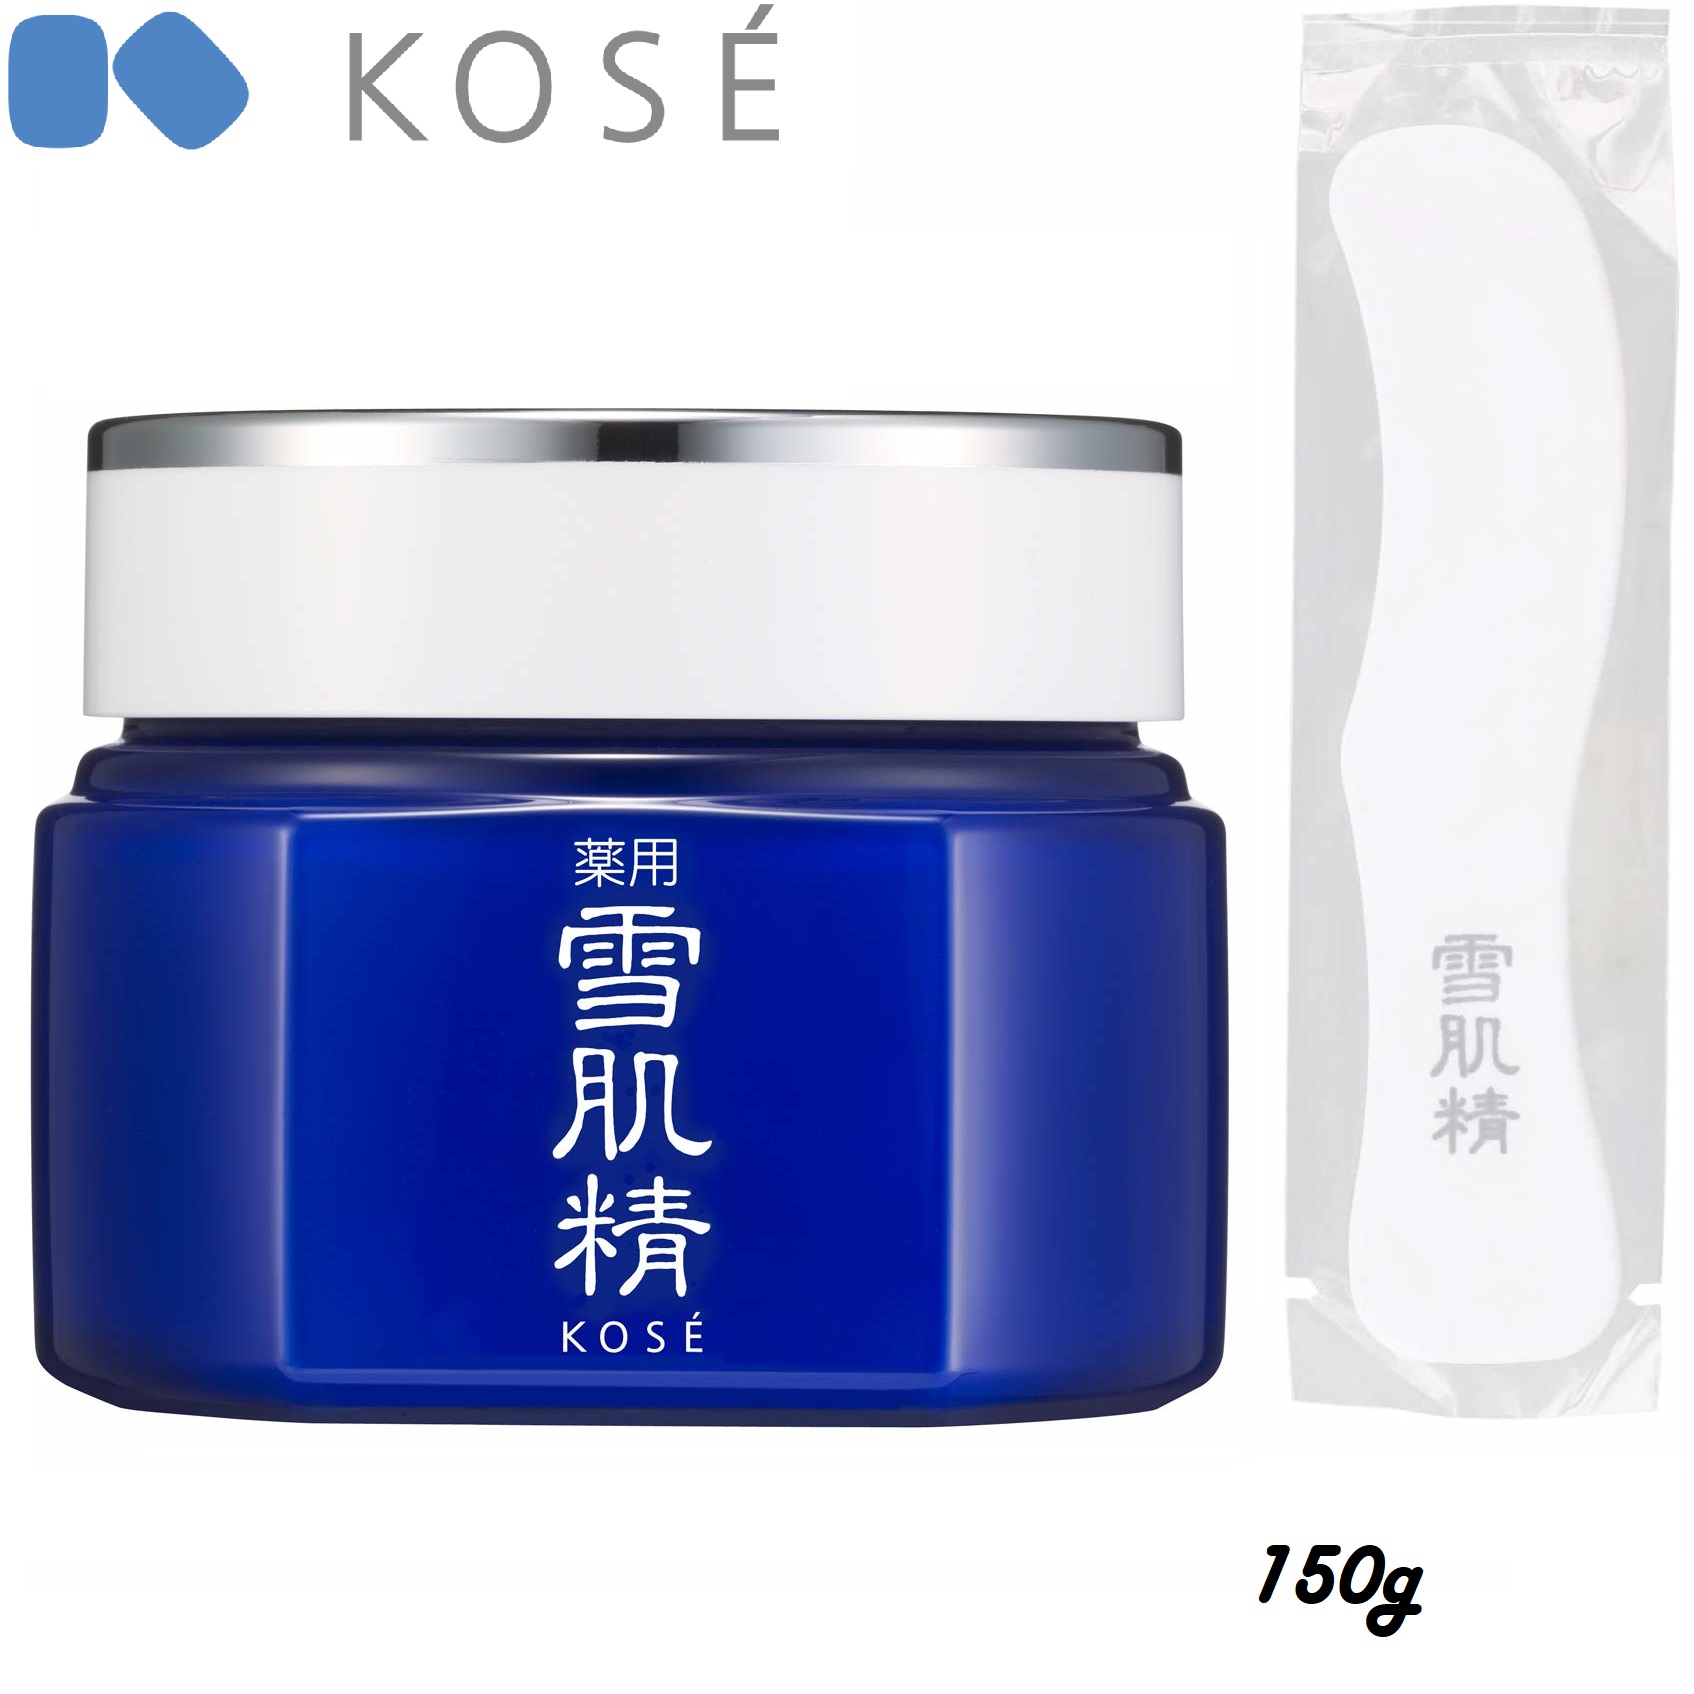 Mặt nạ massage trắng da từ thảo dược Kose Sekkisei Herbal Esthetic Mask 150g - Nhật Bản.